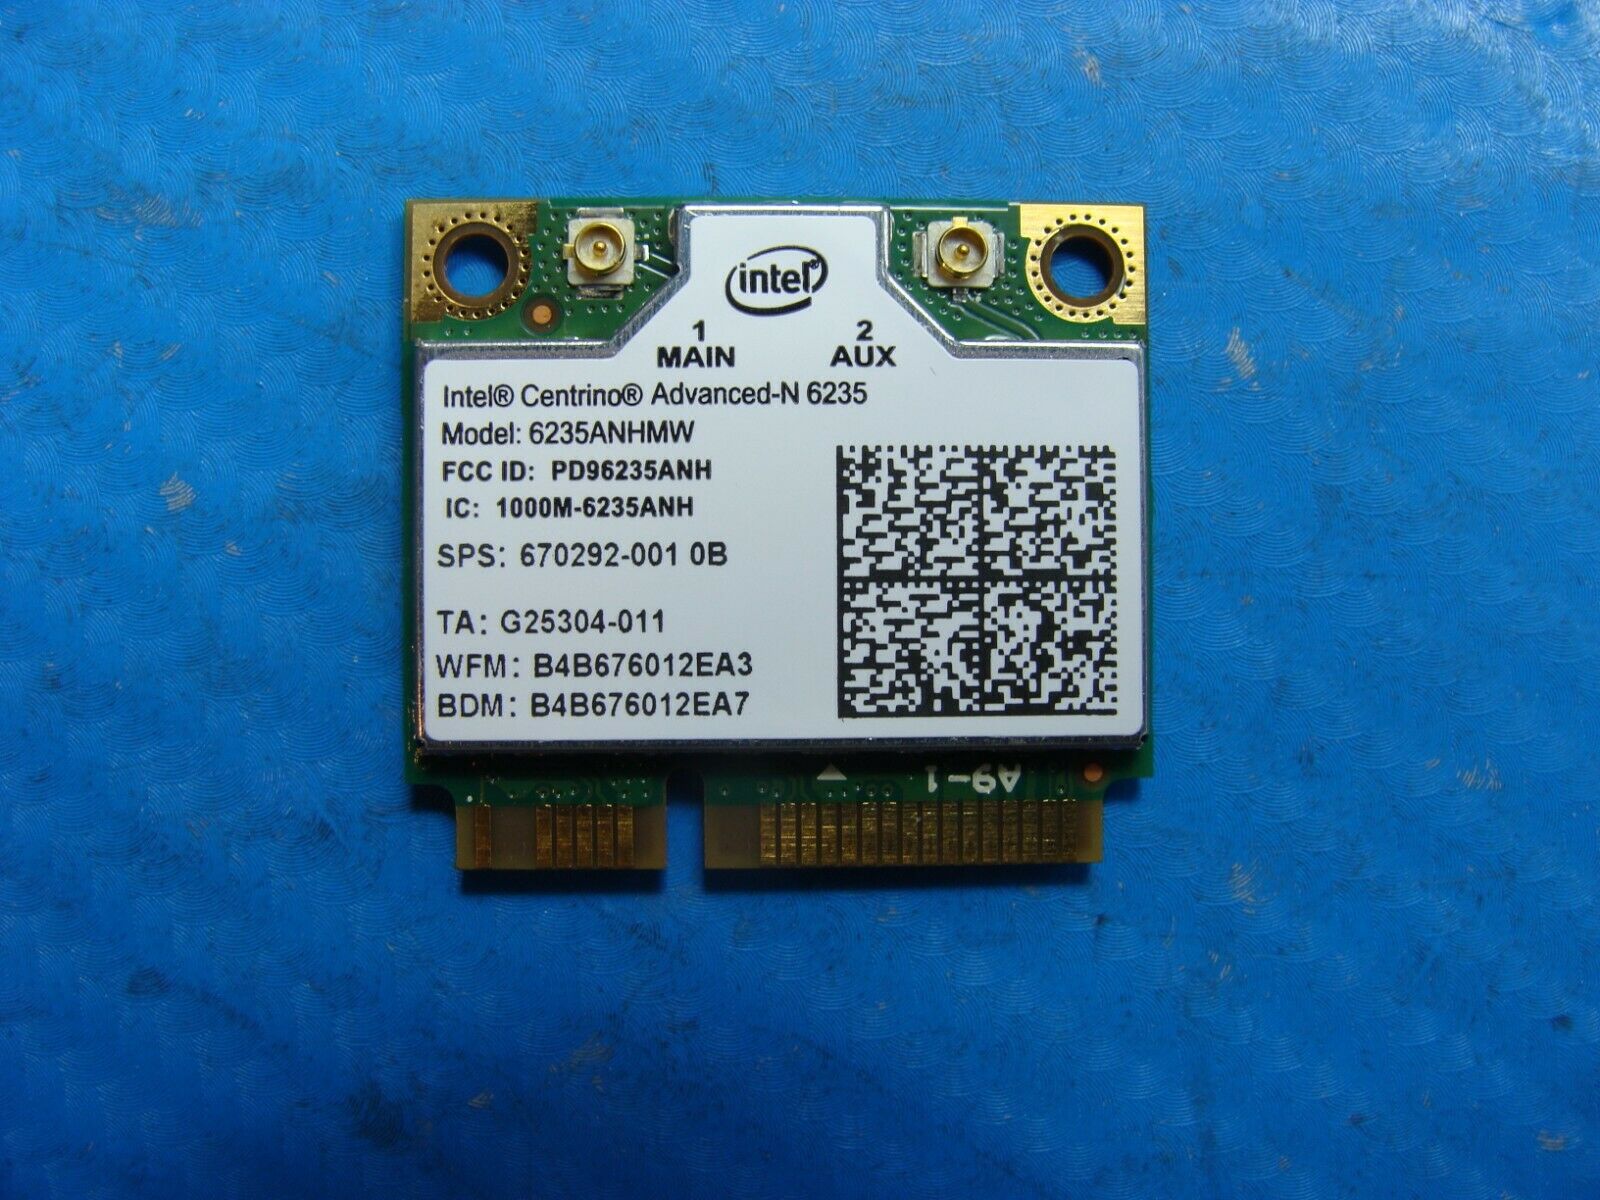 Samsung Ultrabook NP540U3C-A03UB 13.3